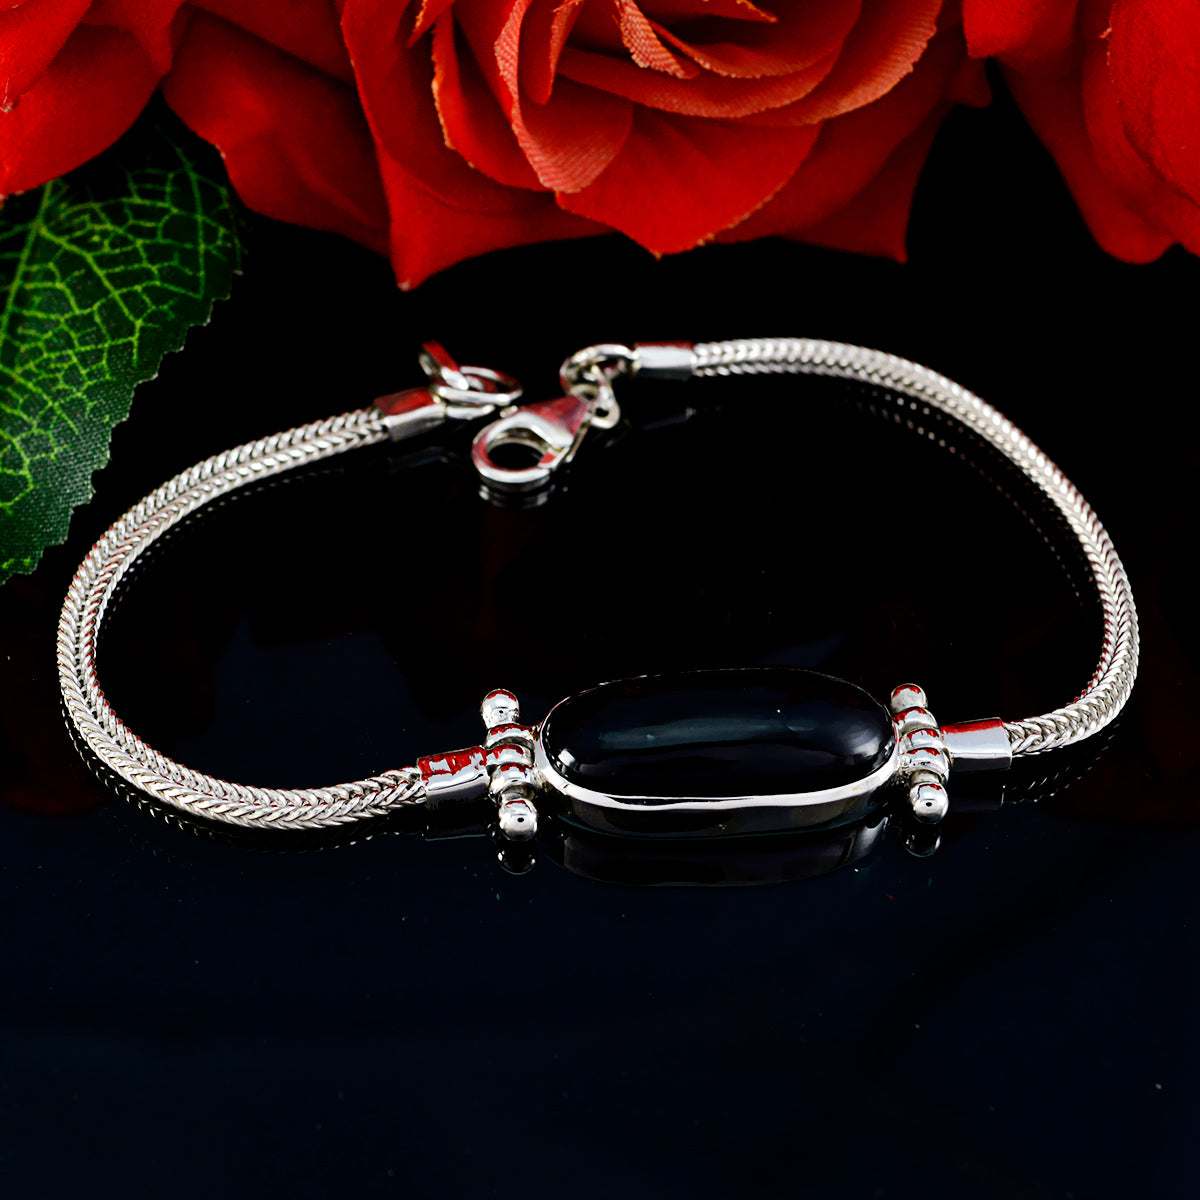 Riyo Real Gemstones Oval Cabochon Black Black Onyx Silver Bracelets gift for anniversary